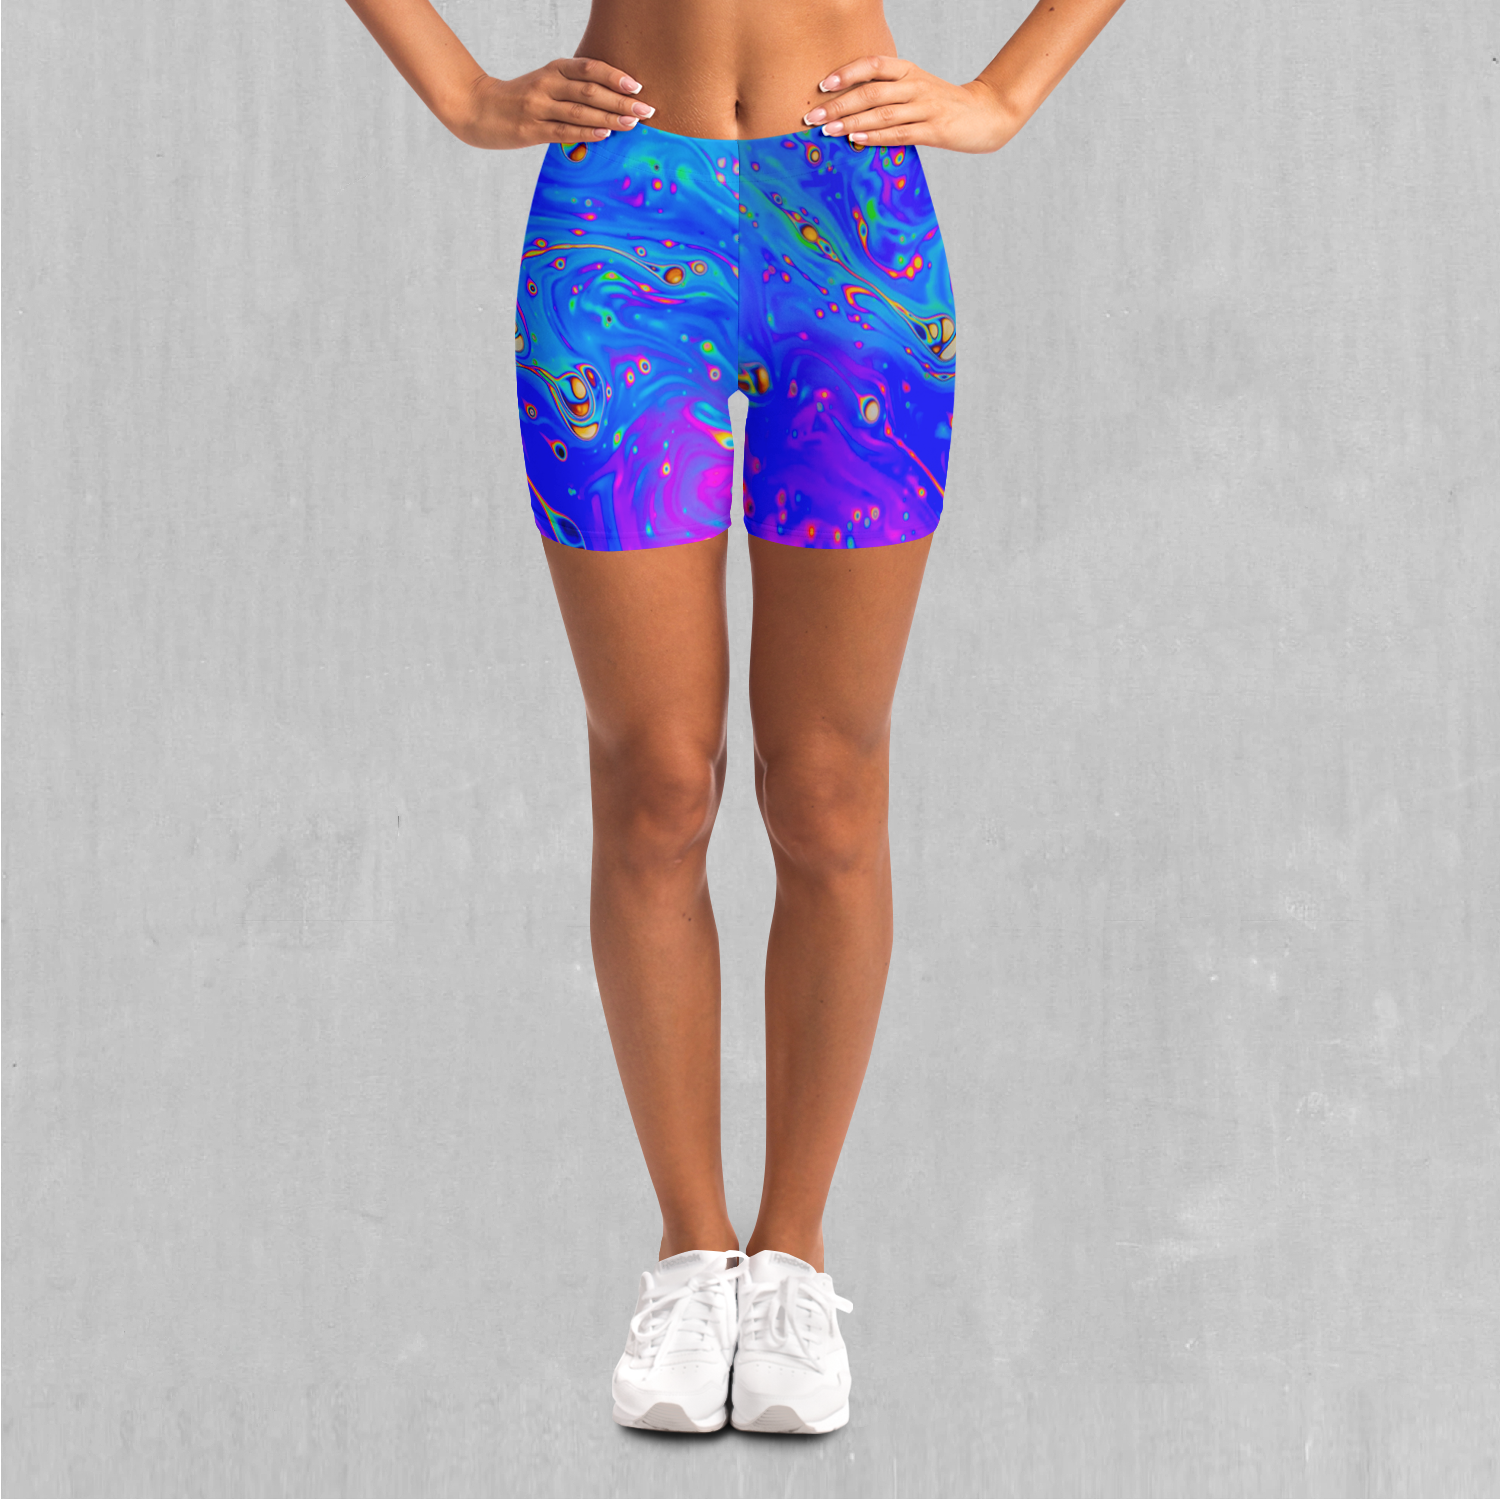 Liquified Yoga Shorts